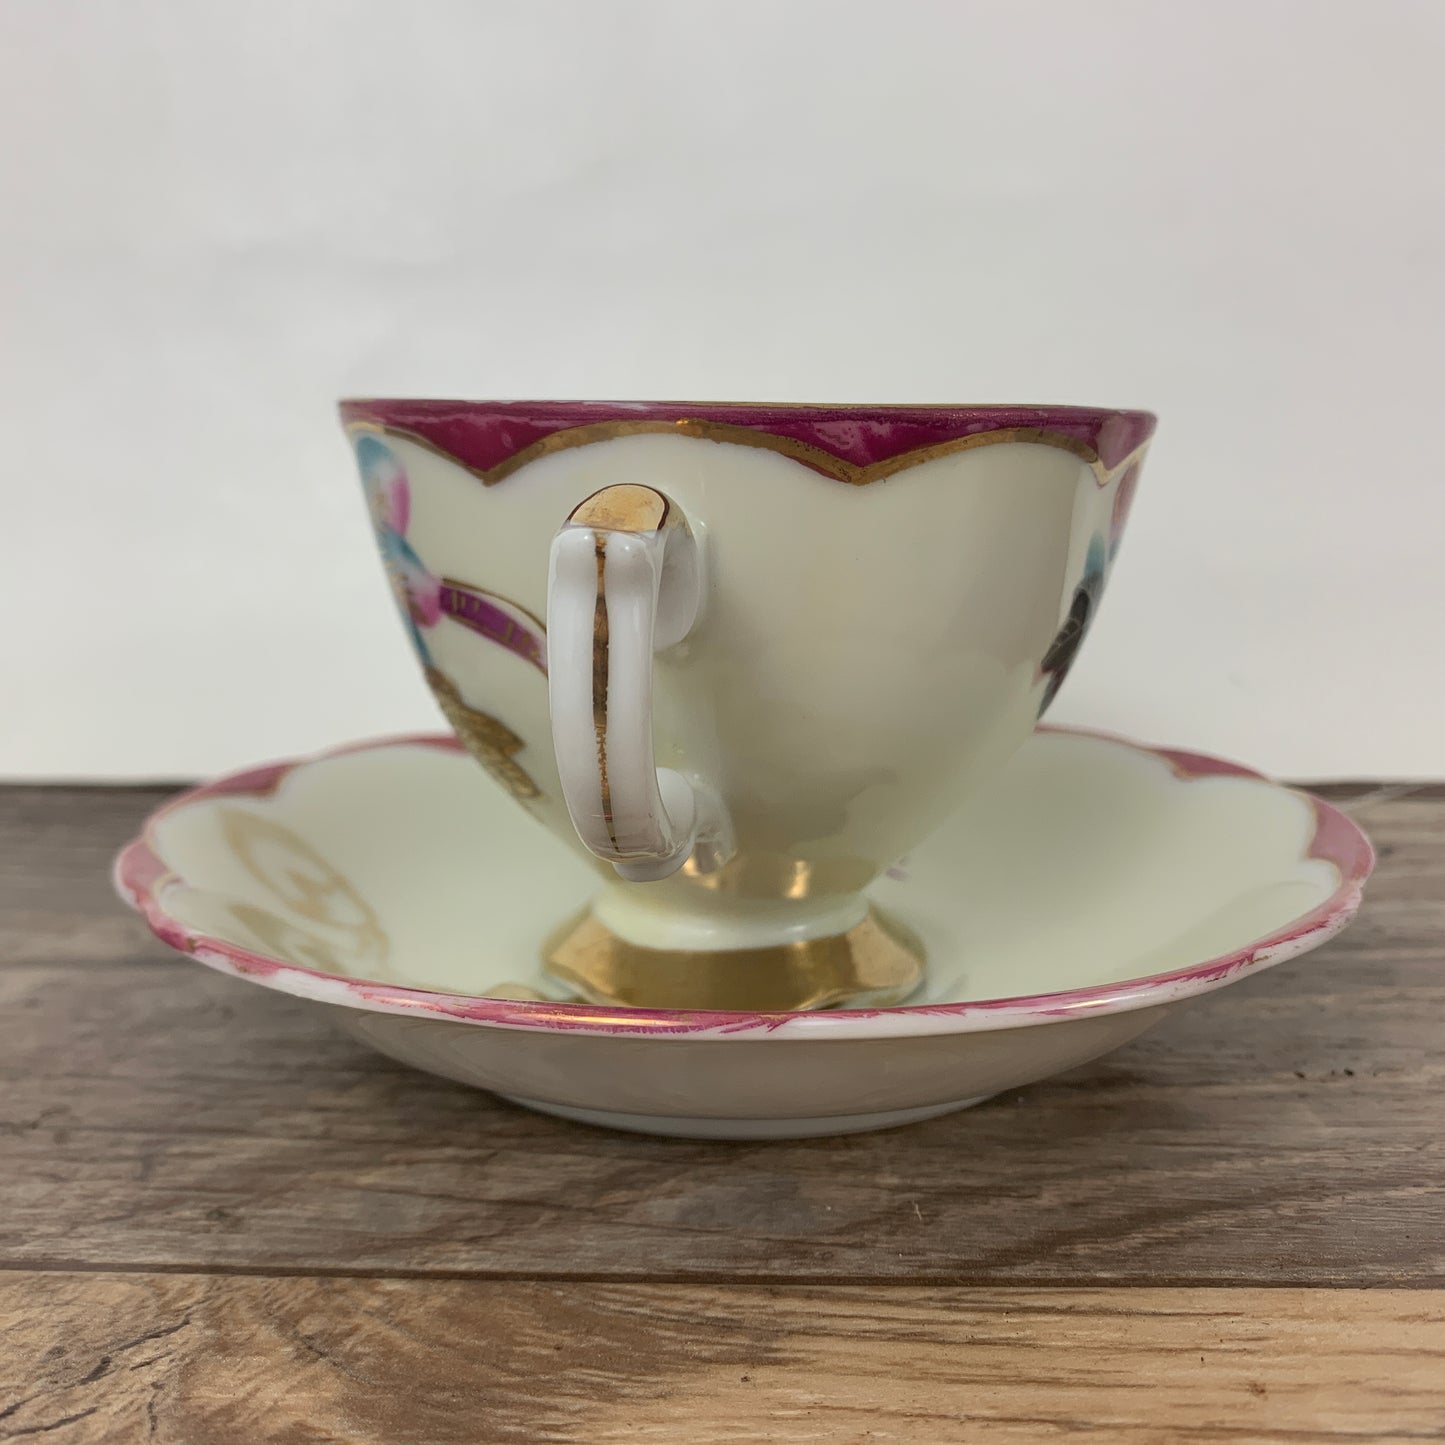 Trimont China Hand Painted Teacup-Vintage Teacups-Occupied Japan Teacup and Saucer-Vintage Tea Cup-Hand Painted Purple Floral Teacups